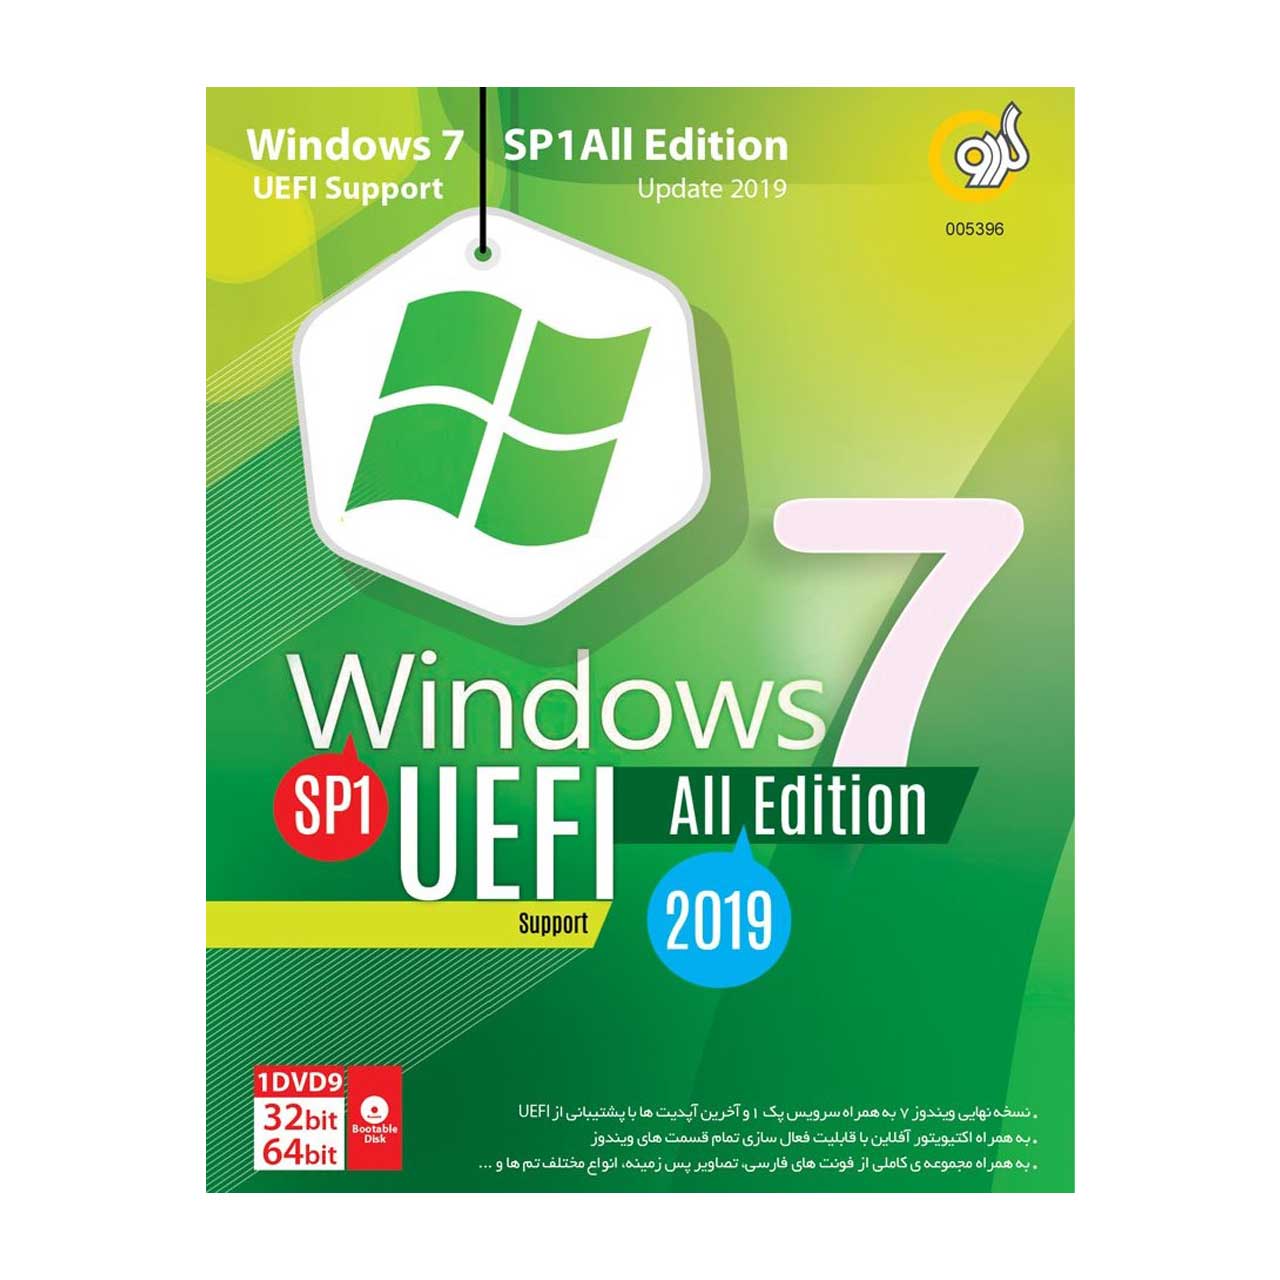 ویندوز Windows 7 SP1 All Edition 

Windows 7 SP1 All Edition 2019 UEFI Support